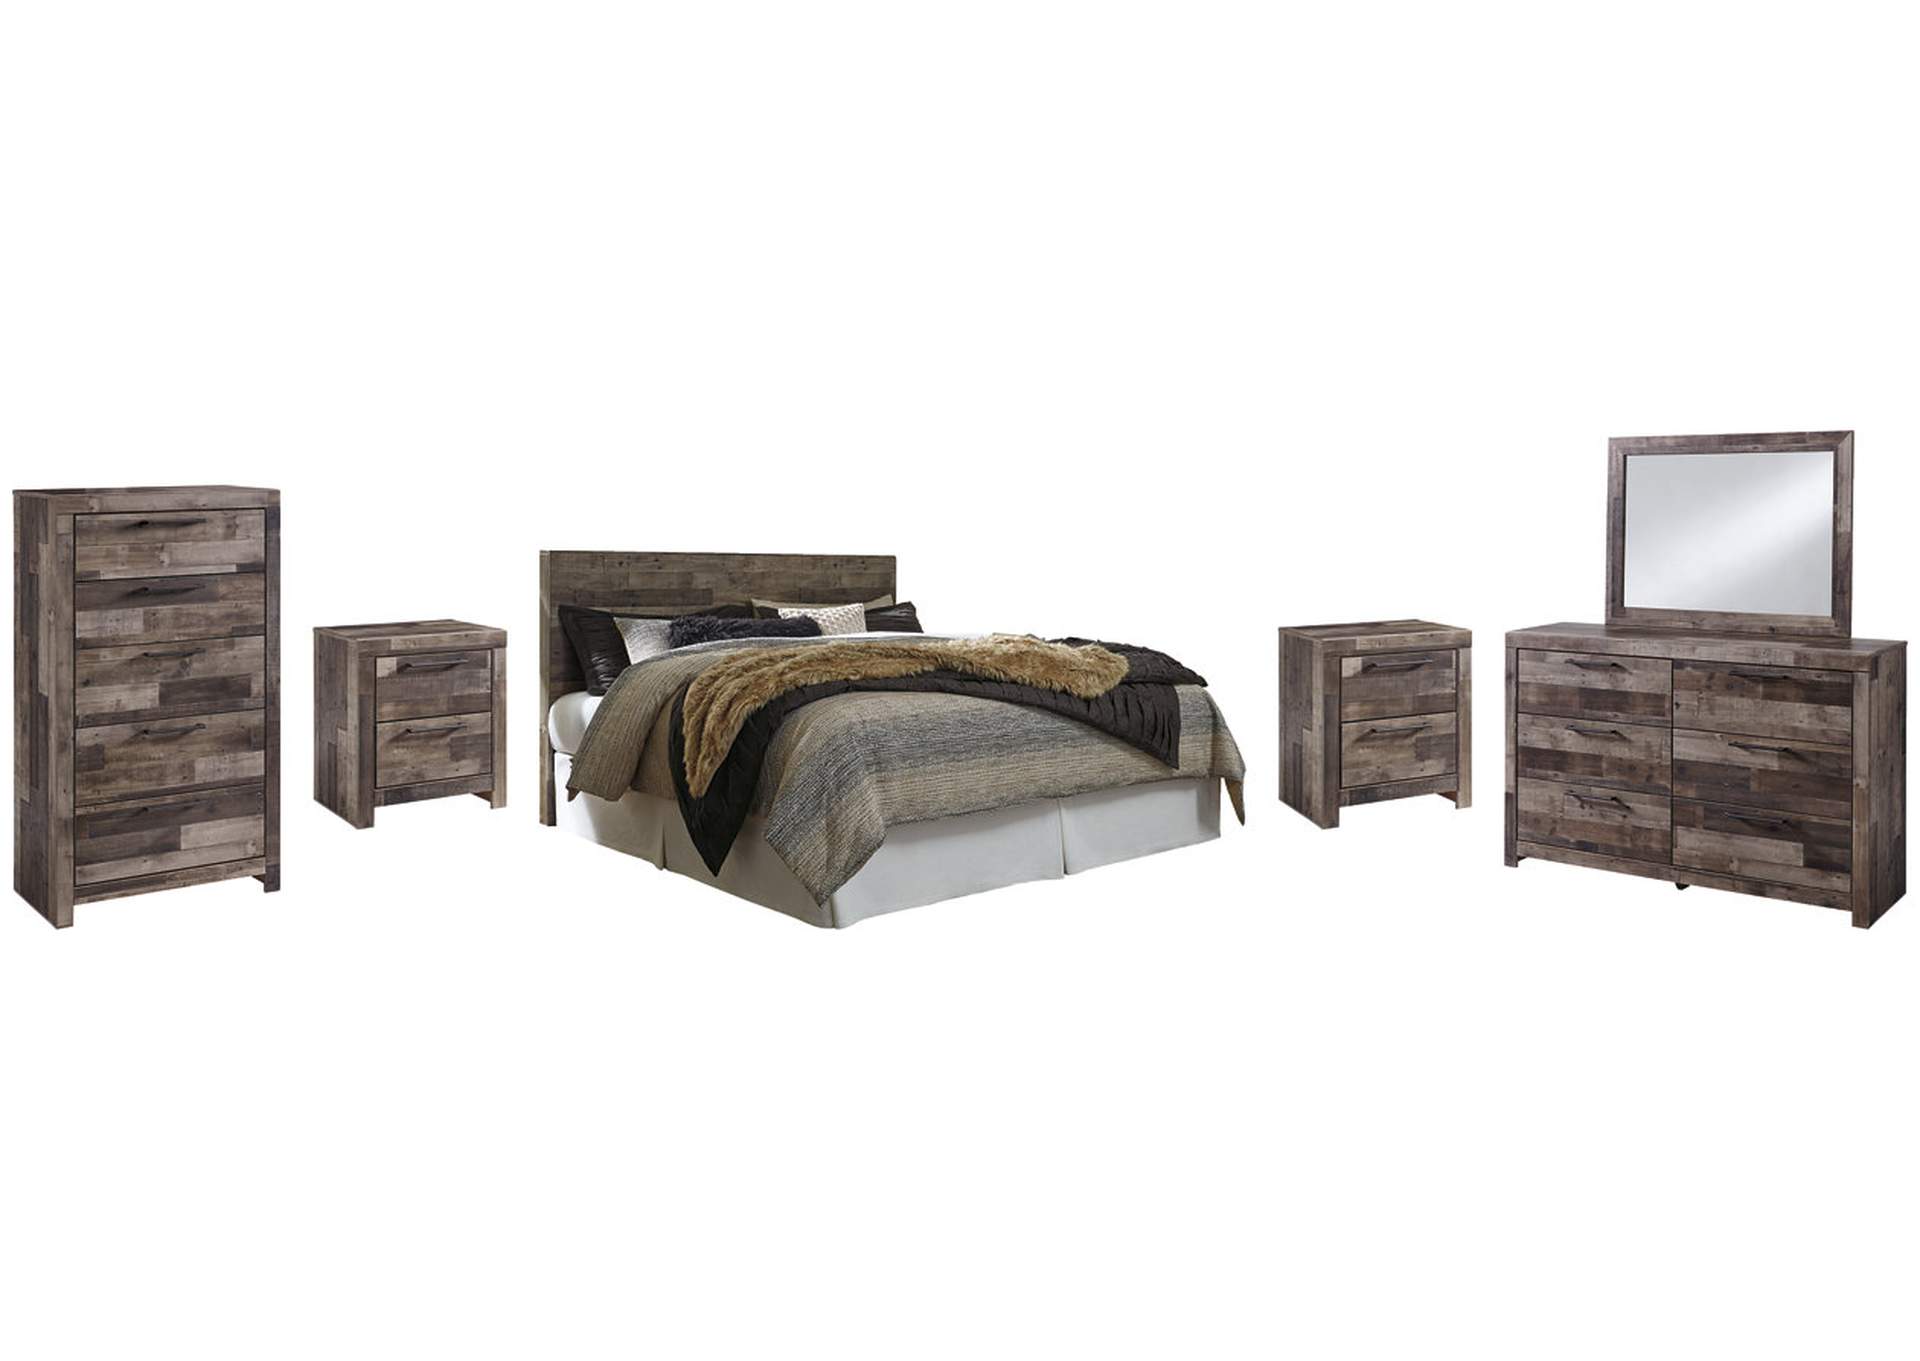 Derekson King Panel Headboard Bed with Mirrored Dresser, Chest and 2 Nightstands,Benchcraft